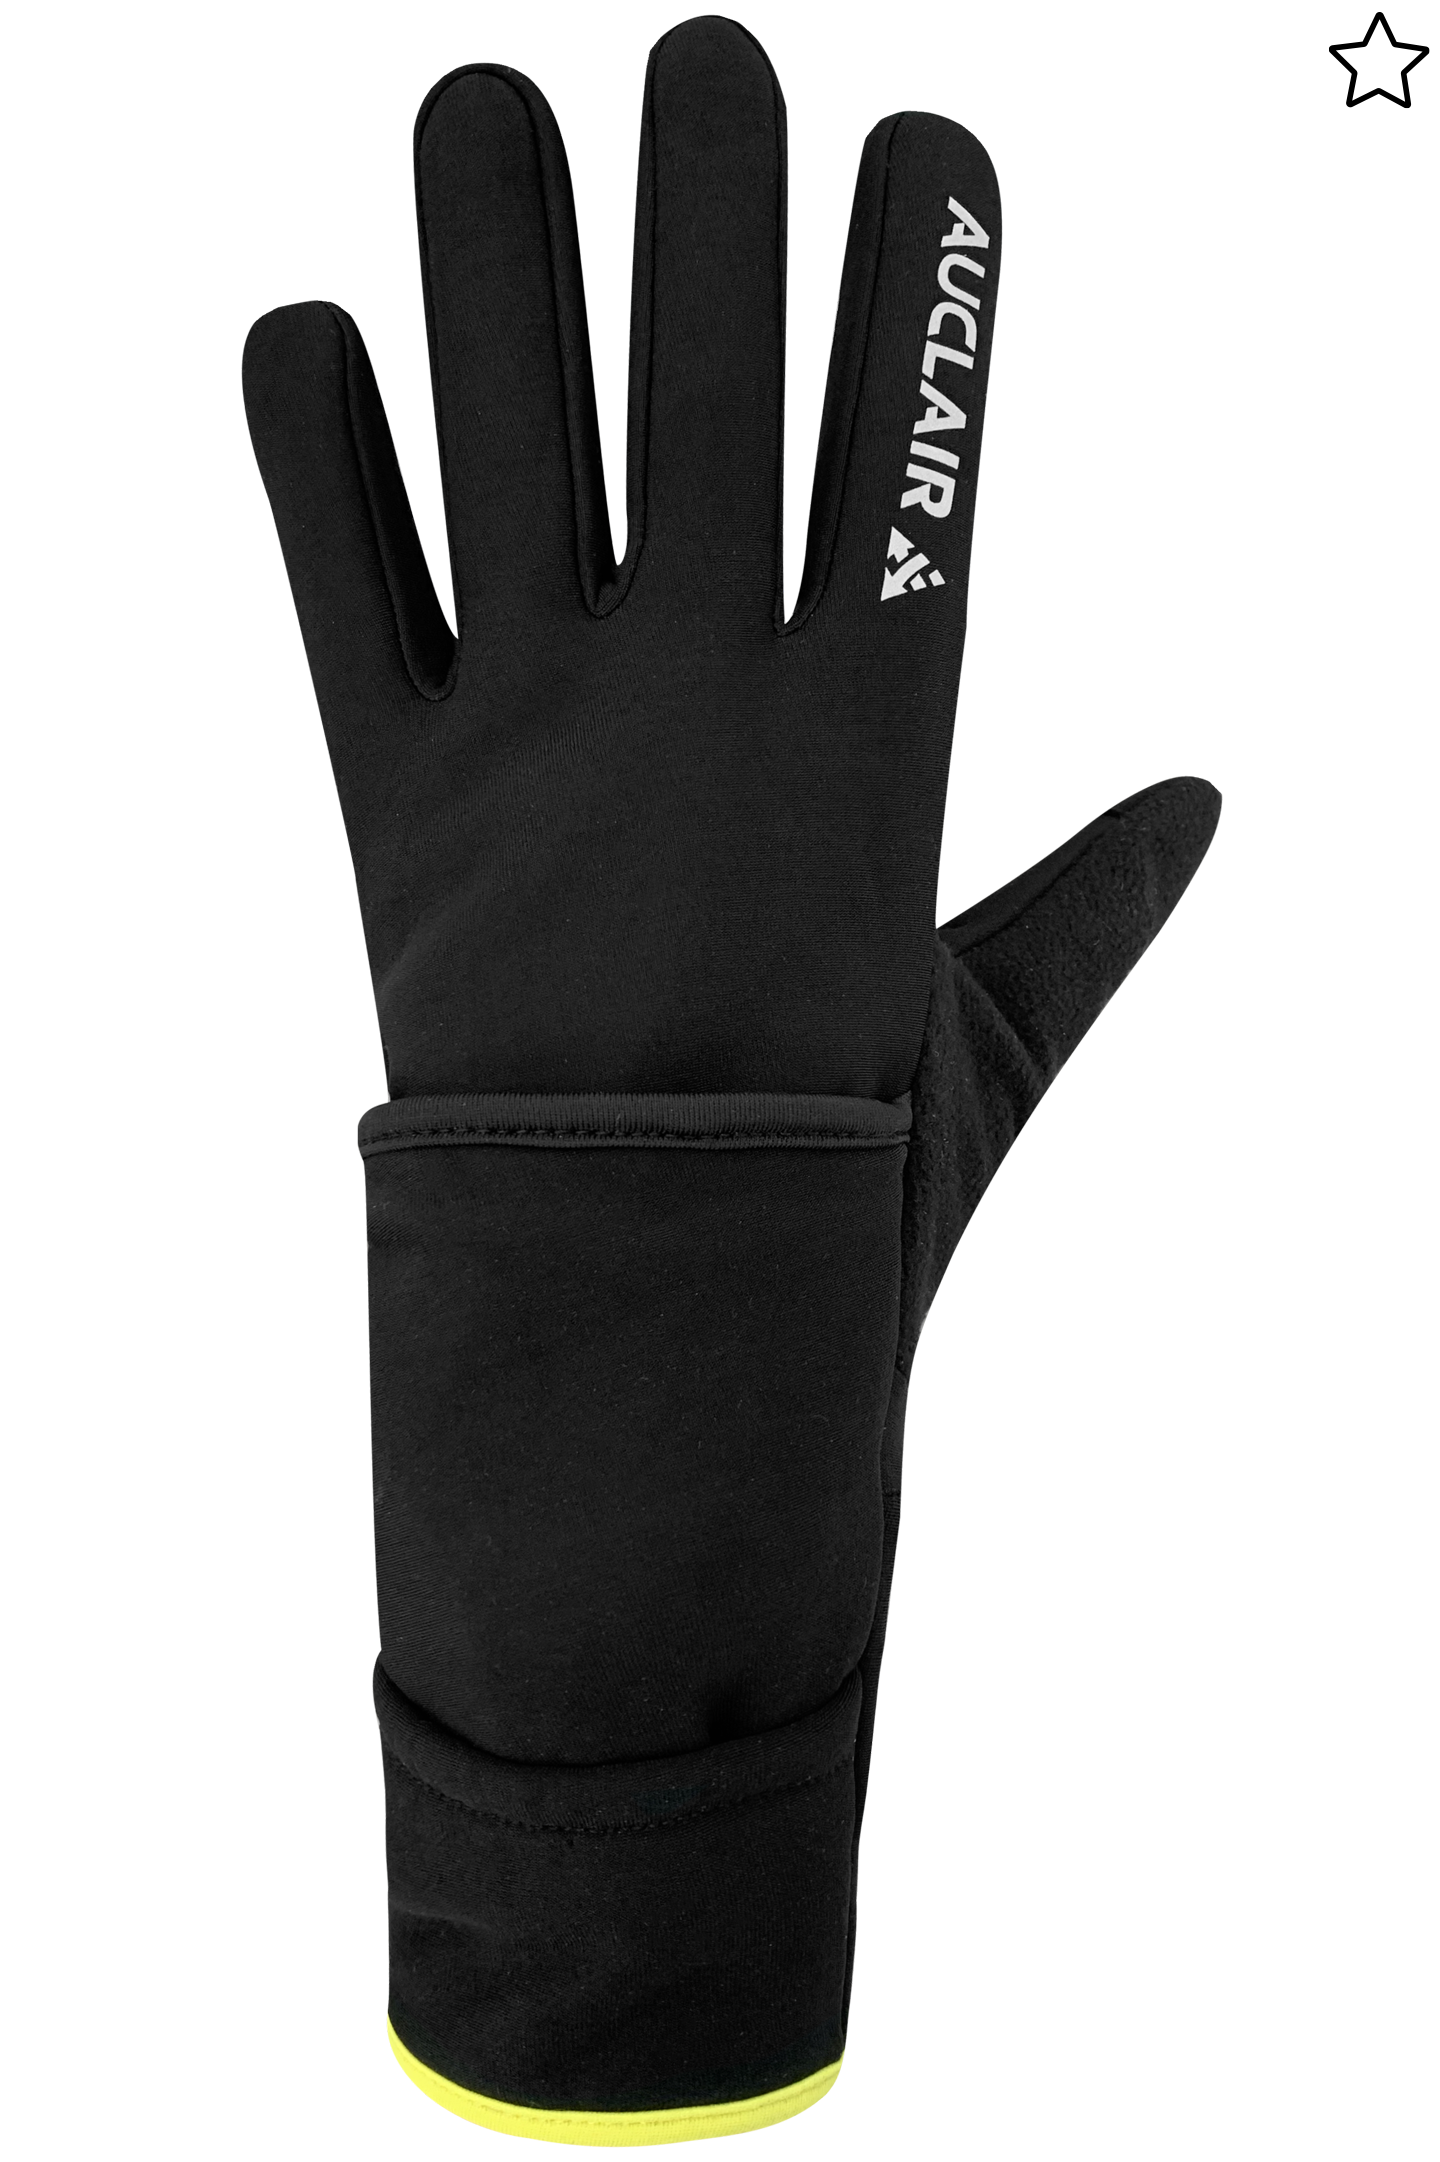 VO2 Max Running Gloves - Adult-Glove-Auclair-XS-BLACK/REFLECTIVE-Auclair Sports